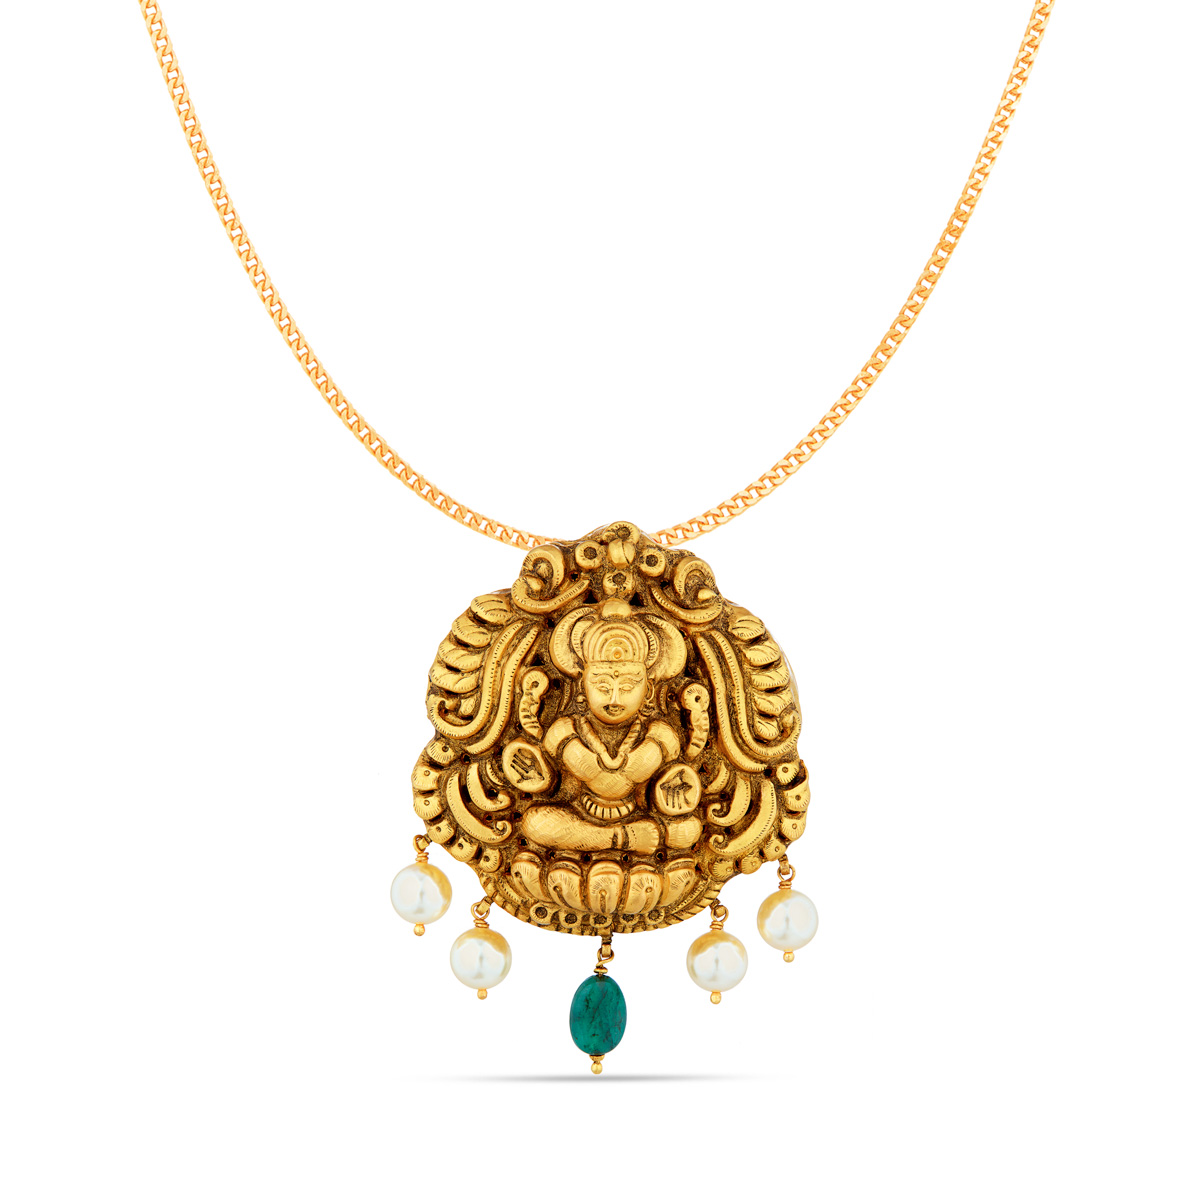  Shrinika pretty pendant